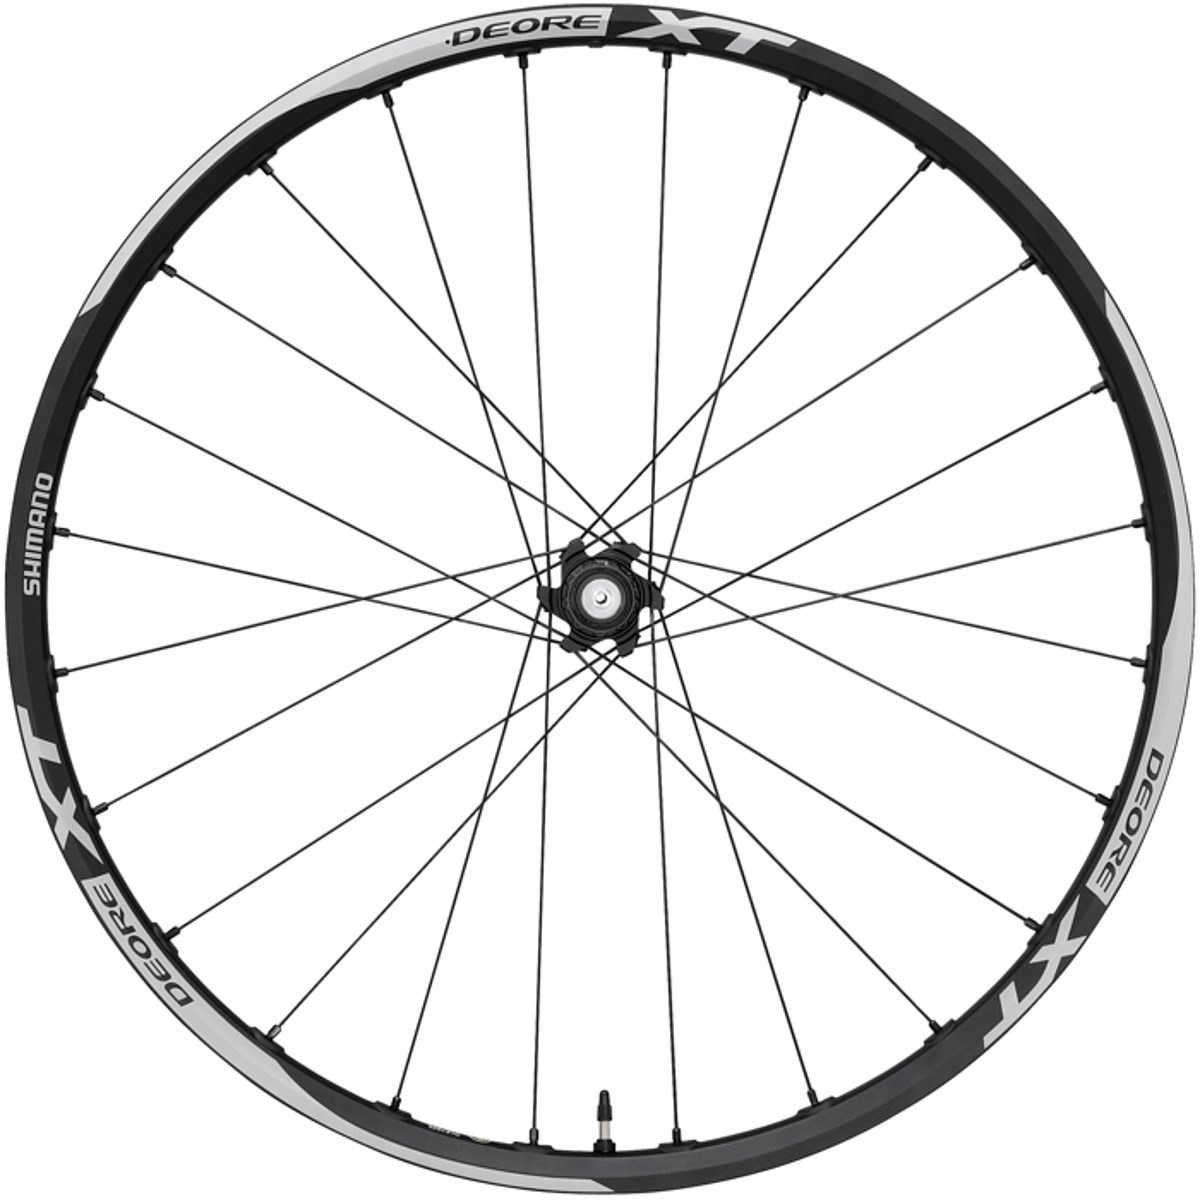 Shimano WH-M785 XT Q/R Rear MTB Wheel product image